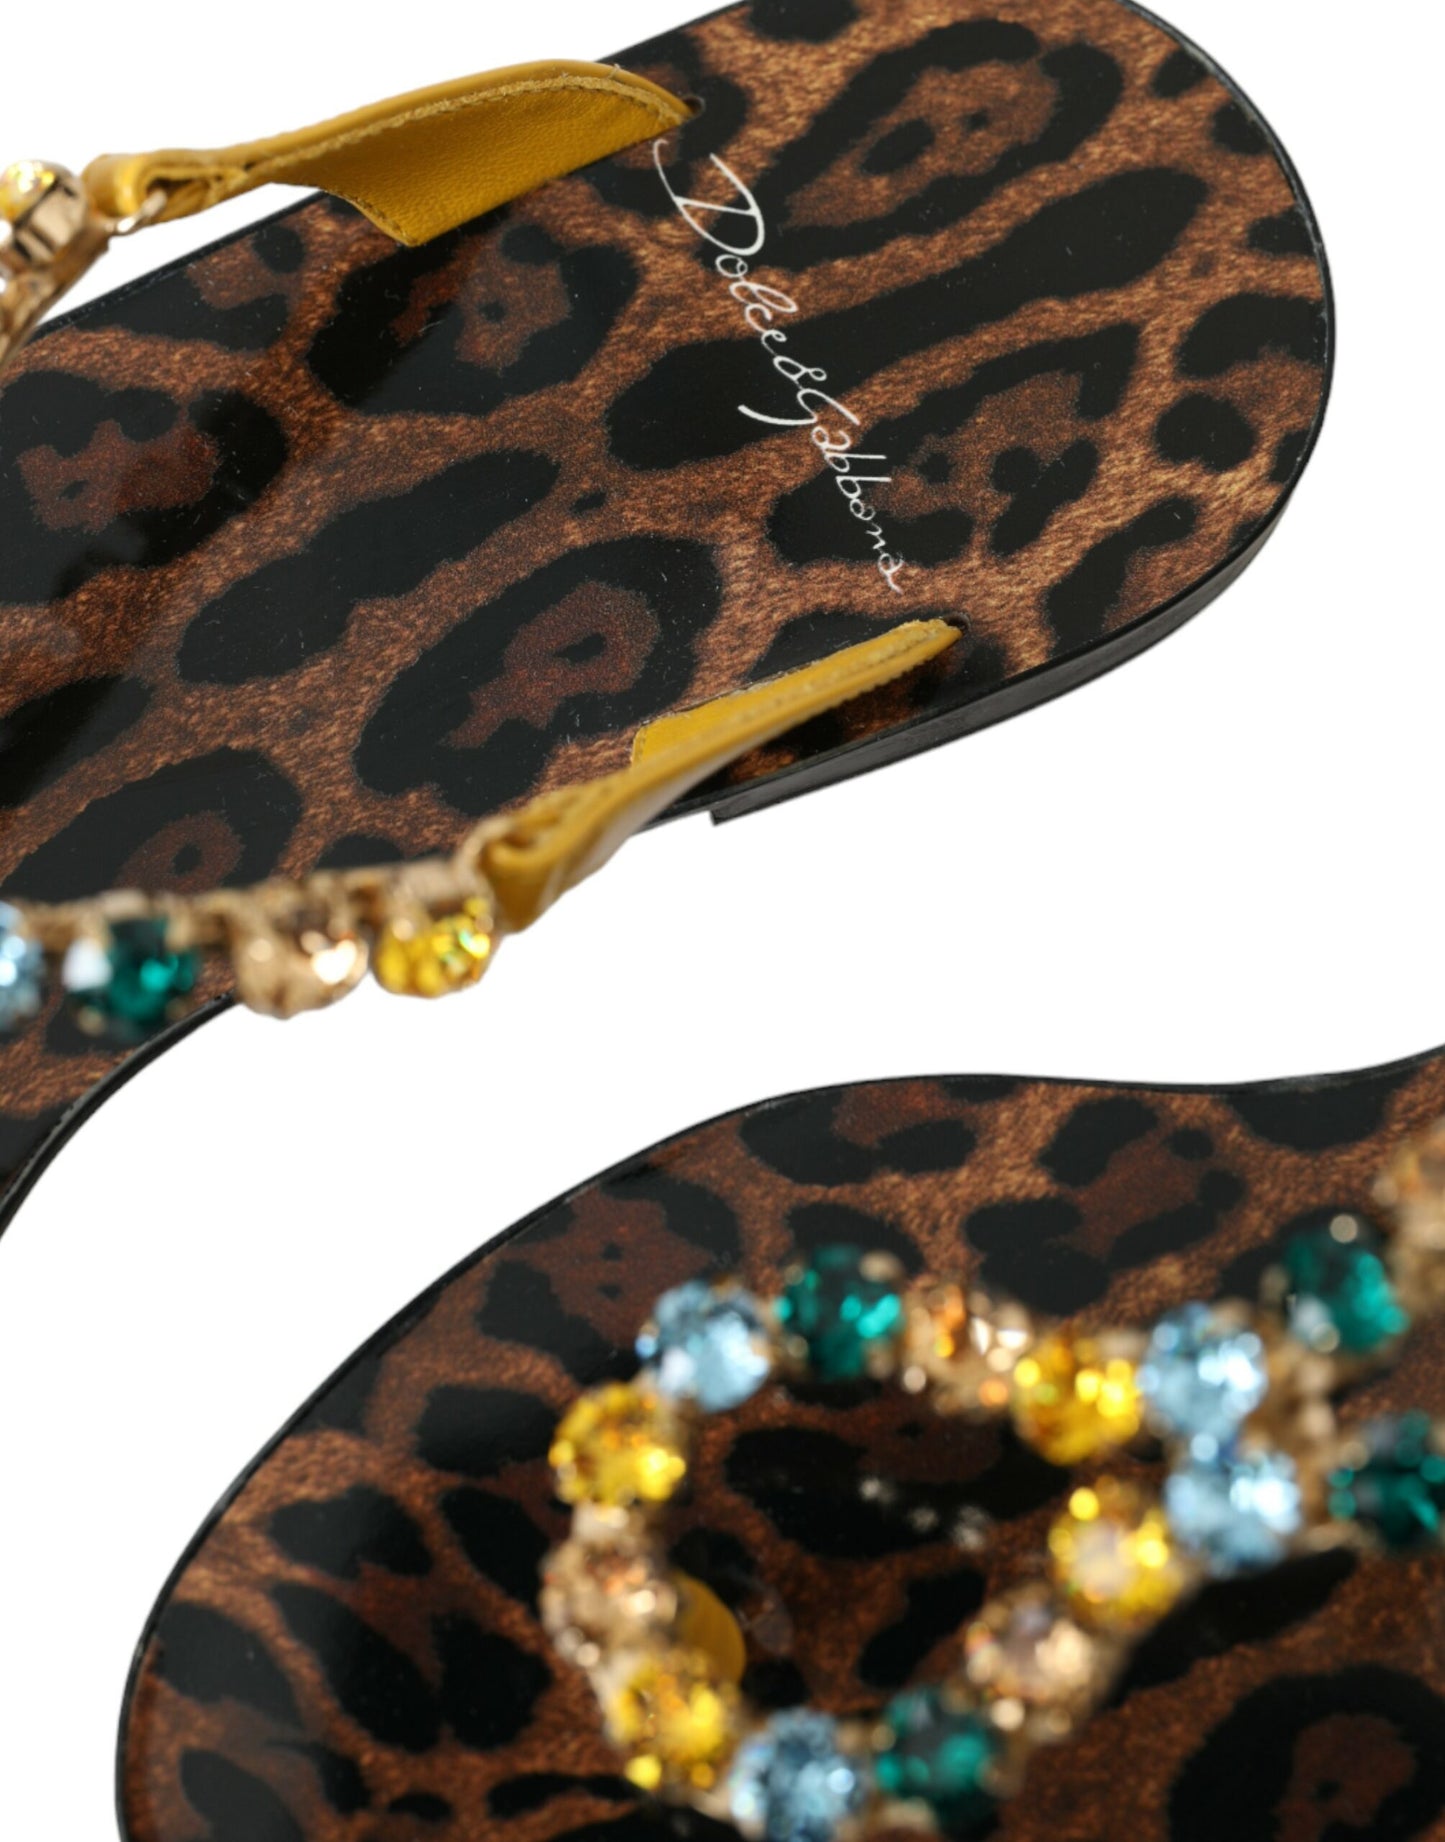 Dolce & Gabbana Mustard Crystal Calf Leather Beachwear Shoes